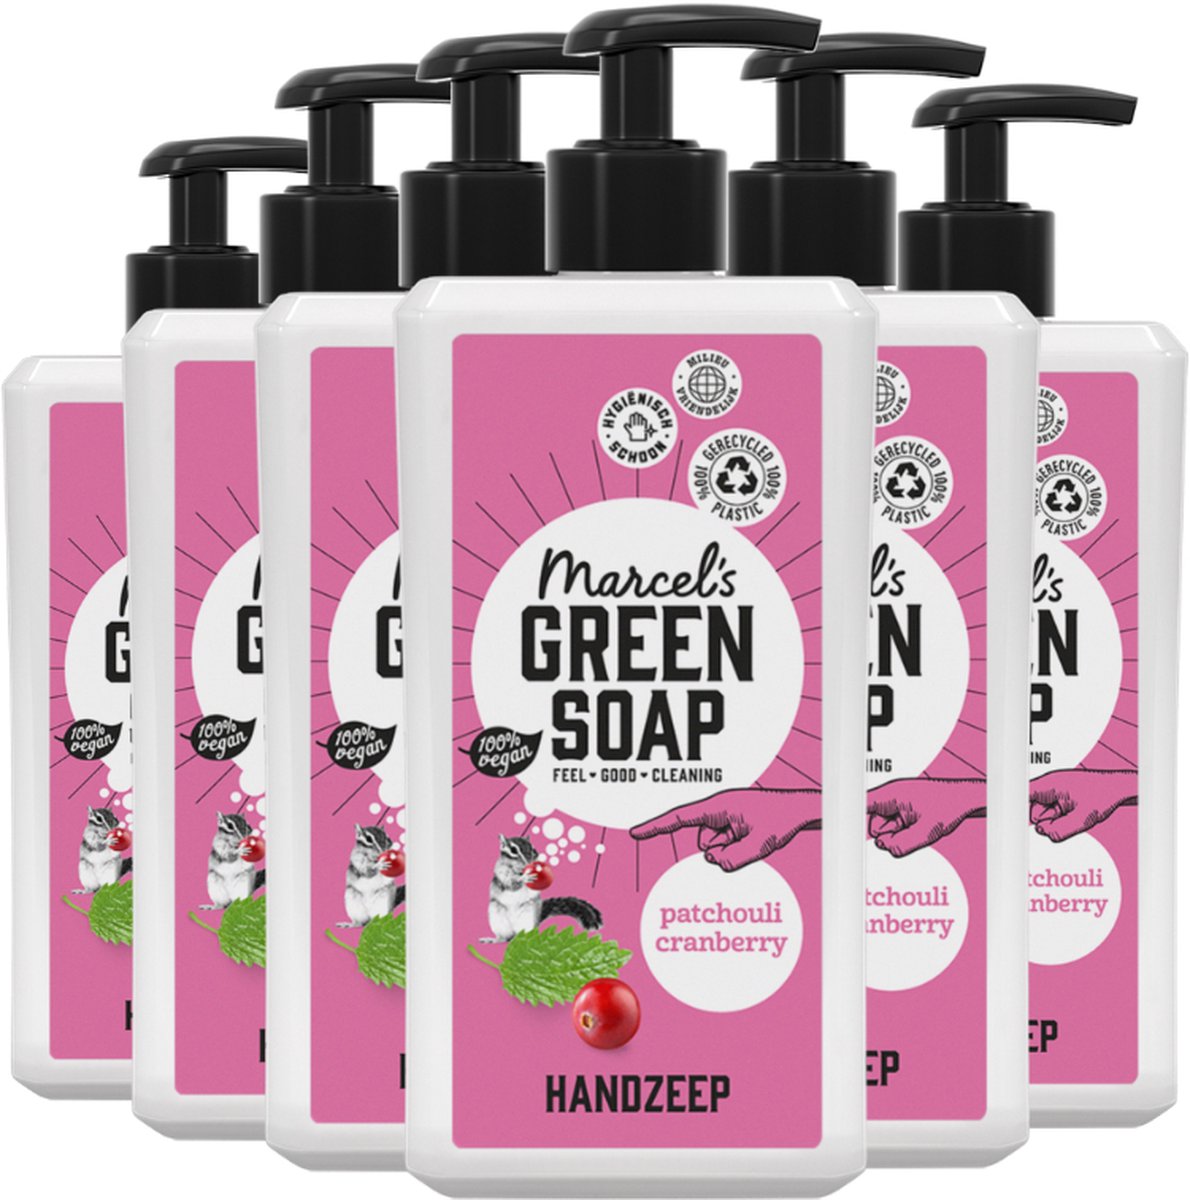 Marcel's Green Soap Handzeep Patchouli & Cranberry - 6 x 500 ml